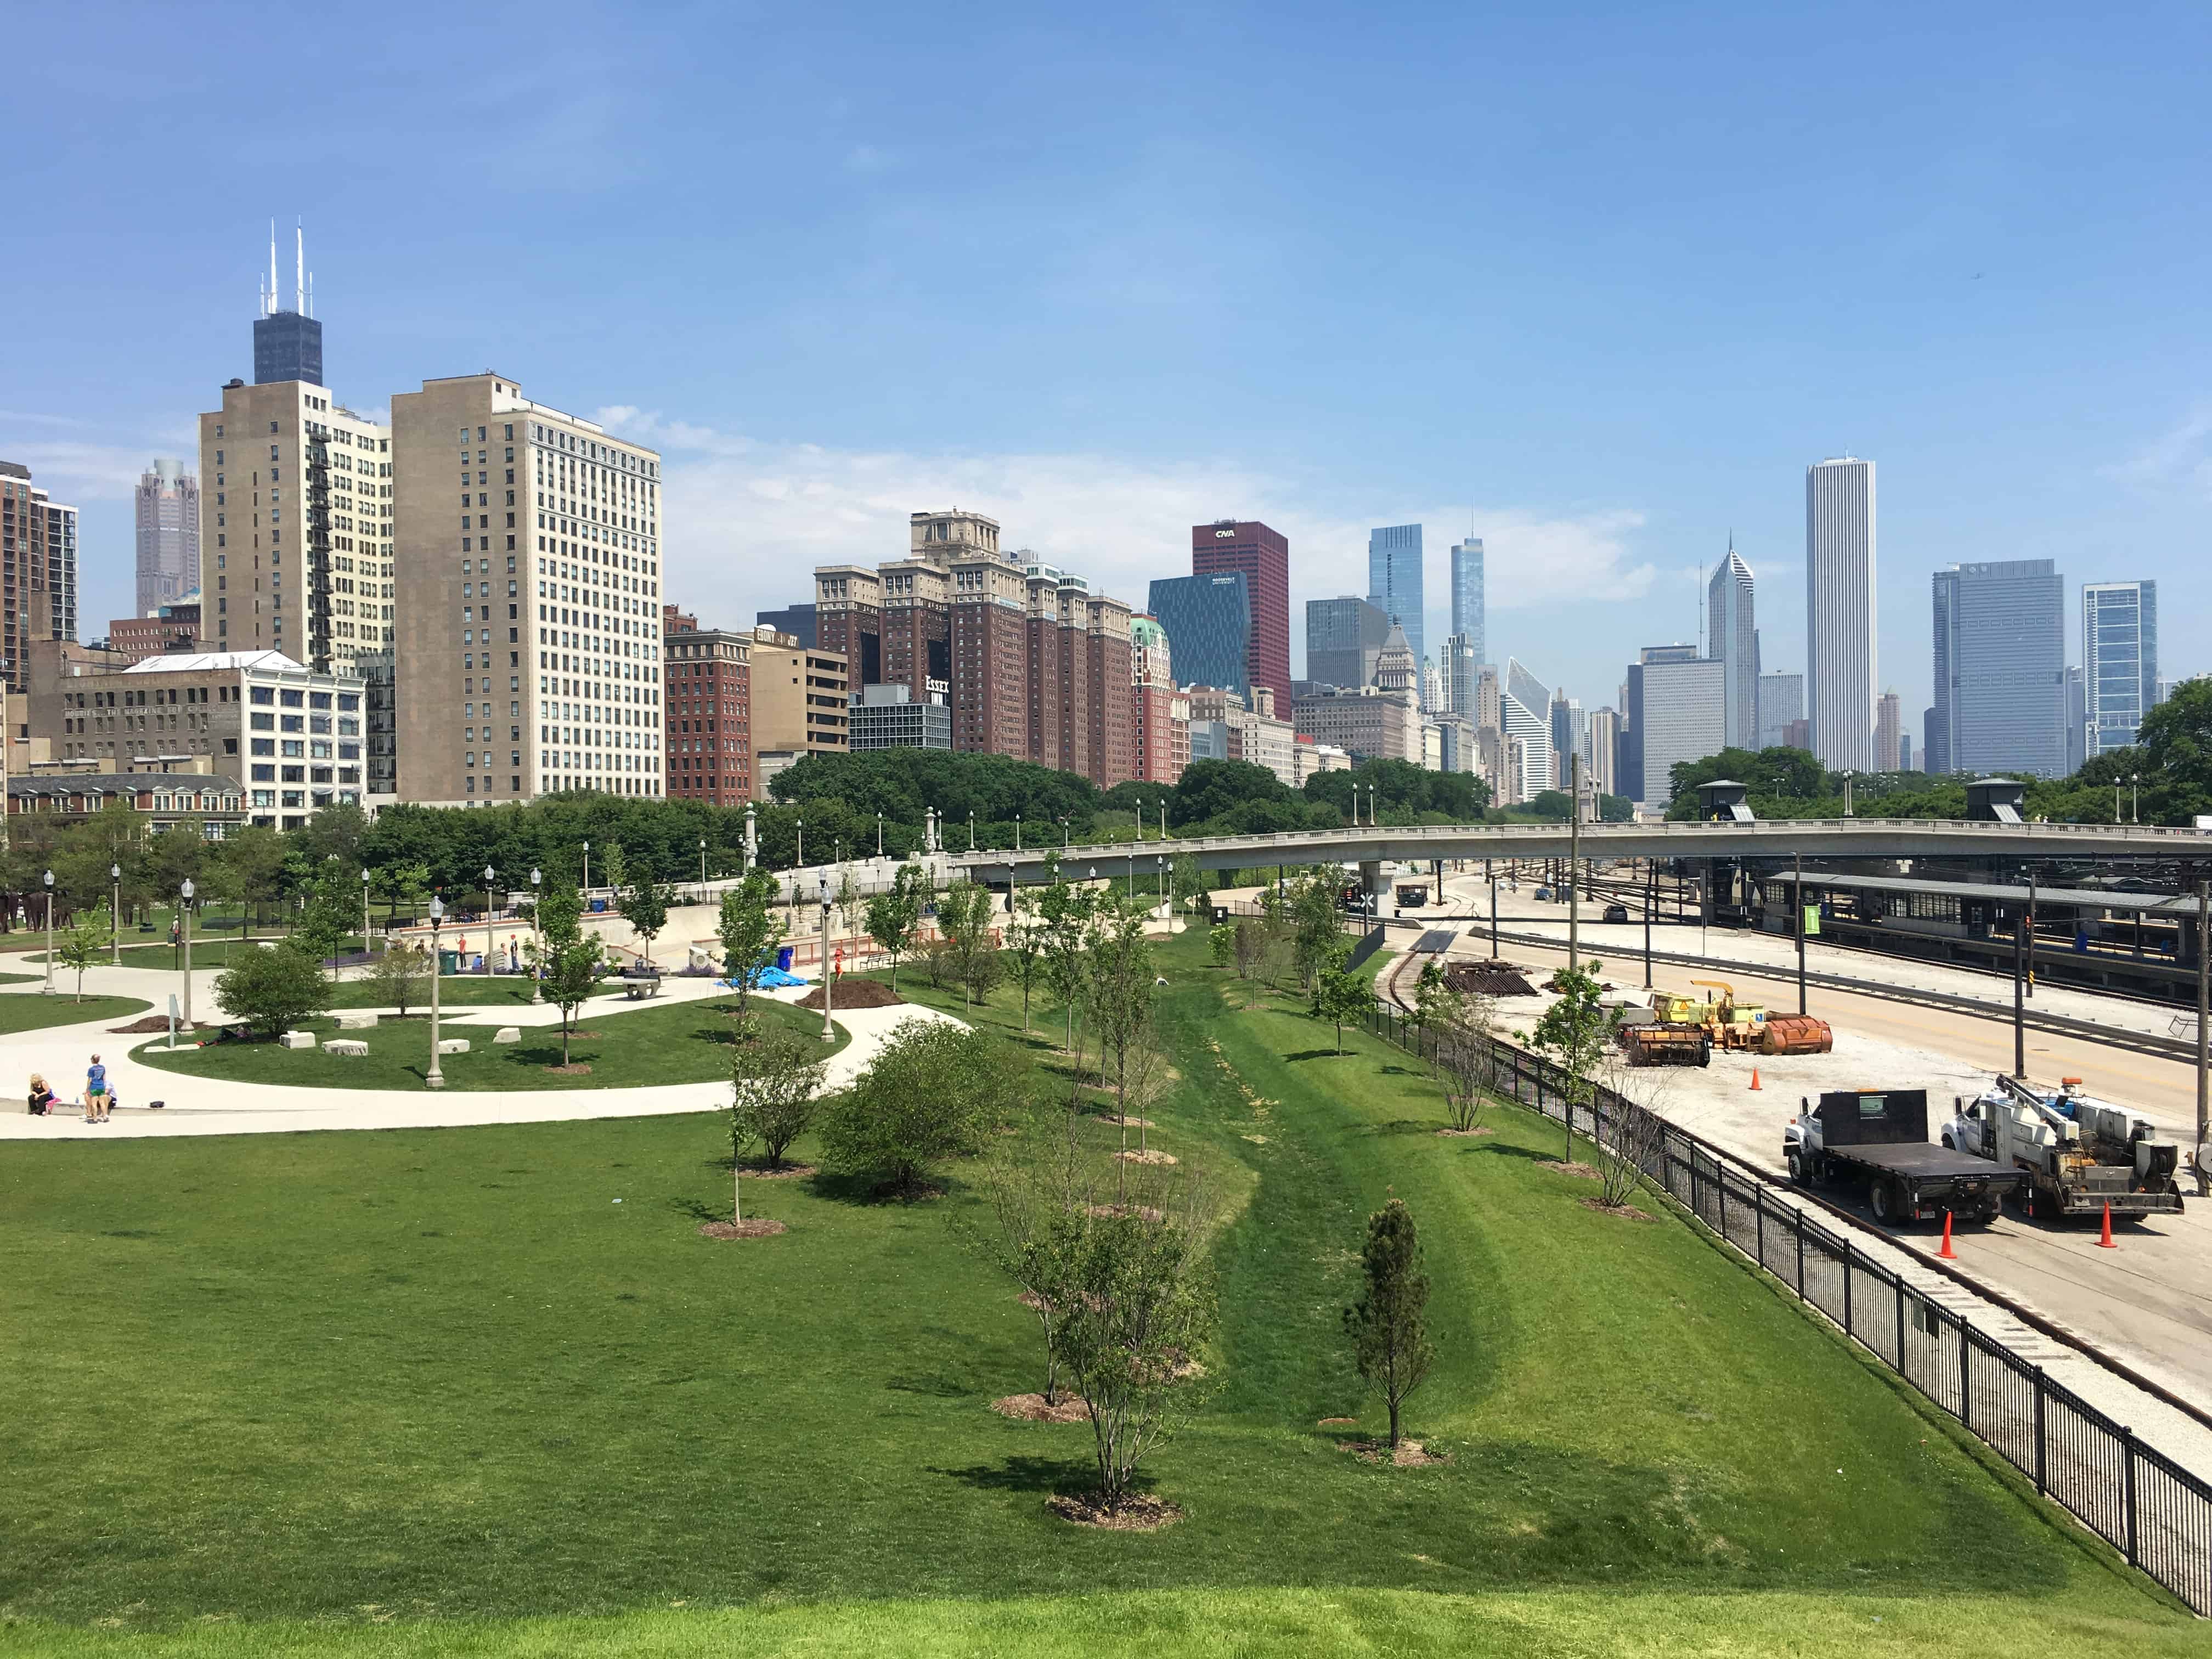 Grant Park in Chicago, Illinois